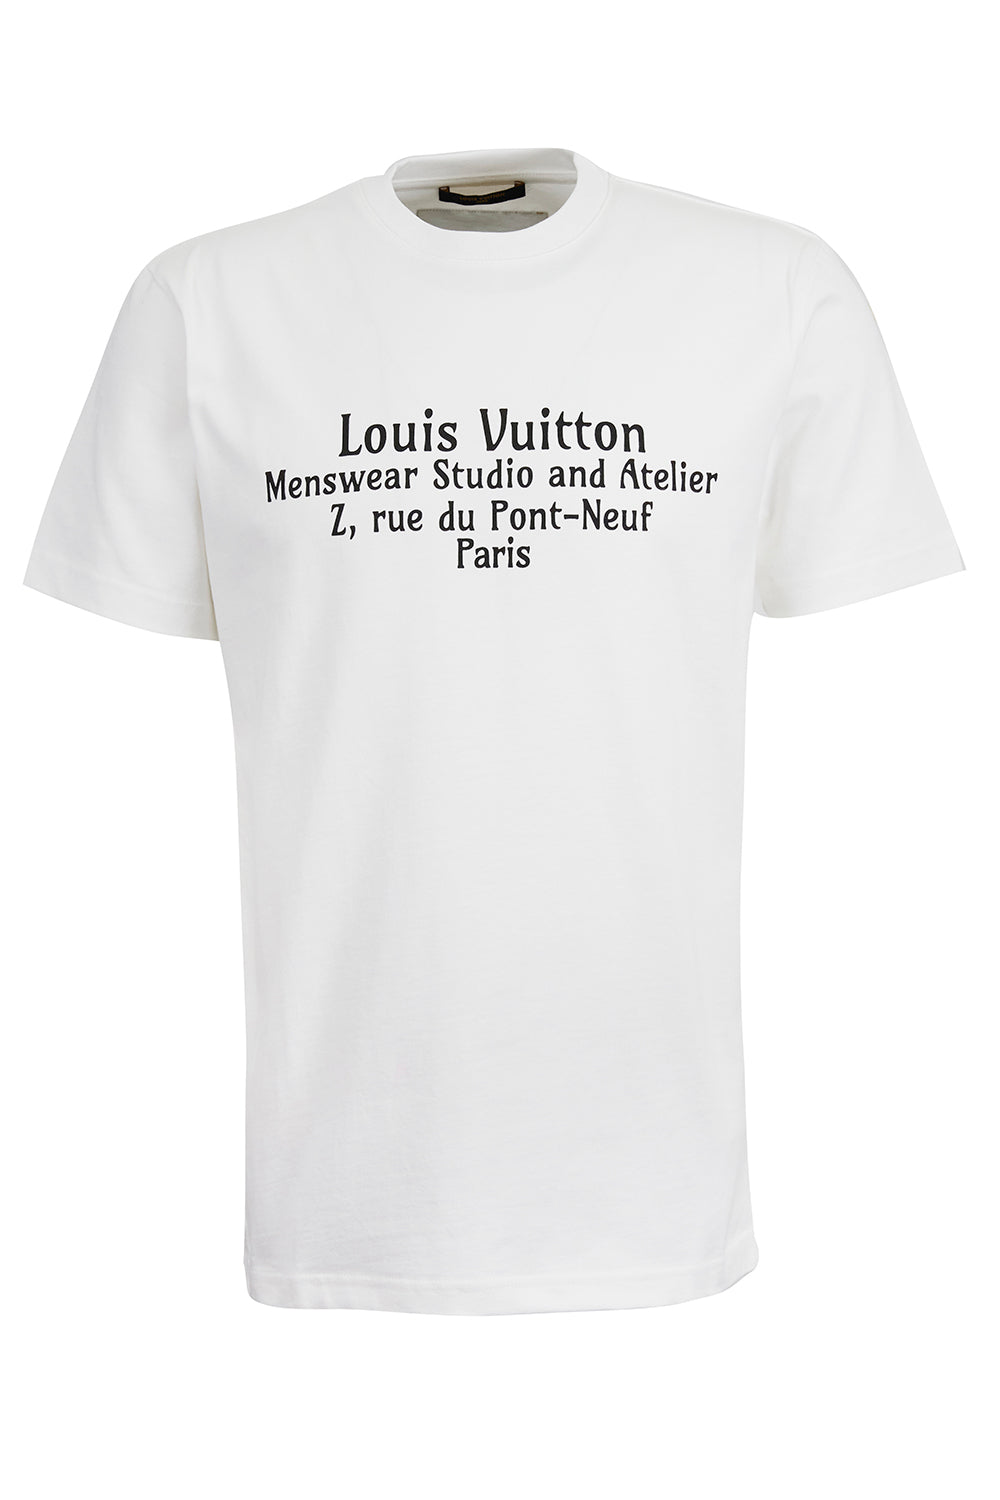 LOUIS VUITTON LETTER PRINT WHITE T-SHIRT